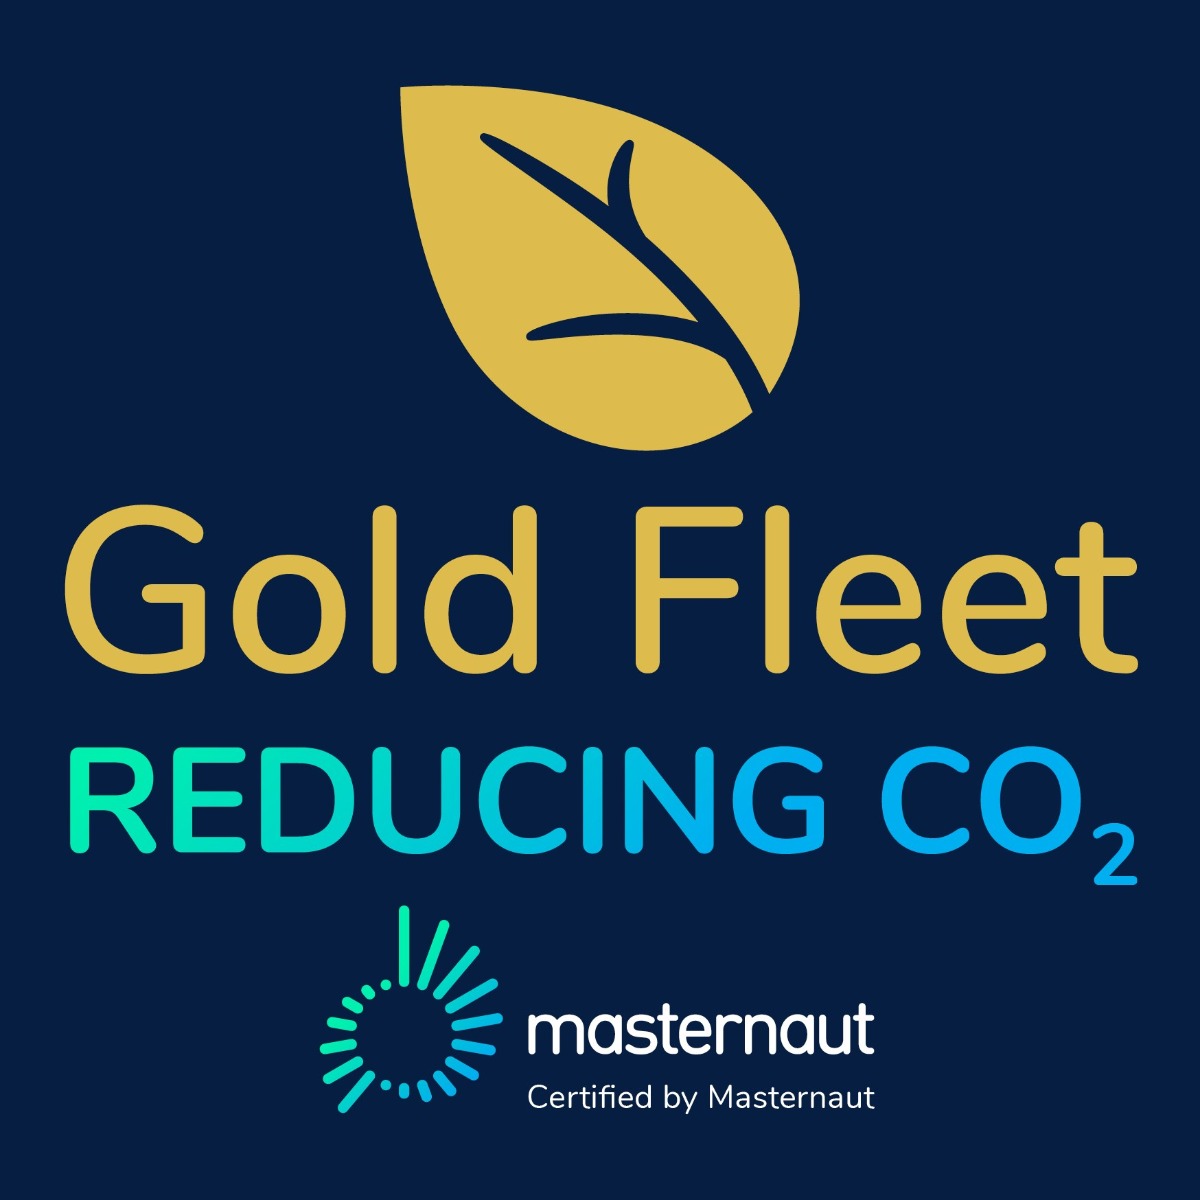 Gold Certification Masternaut Fleet CO2